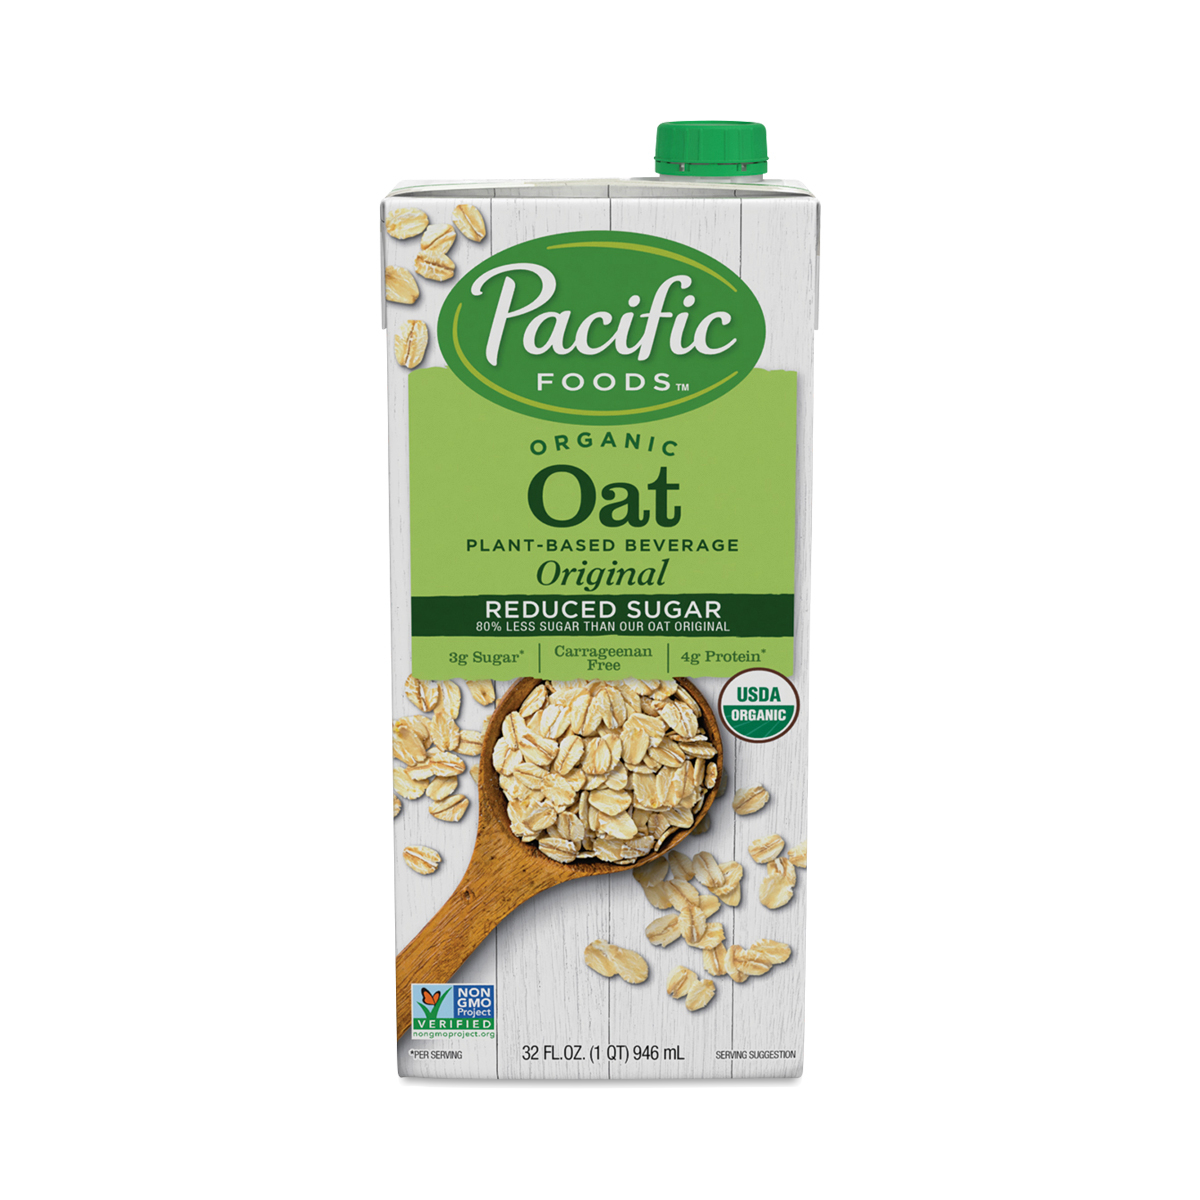 Pacific Foods Organic Reduced Sugar Oat, Original 32 oz box